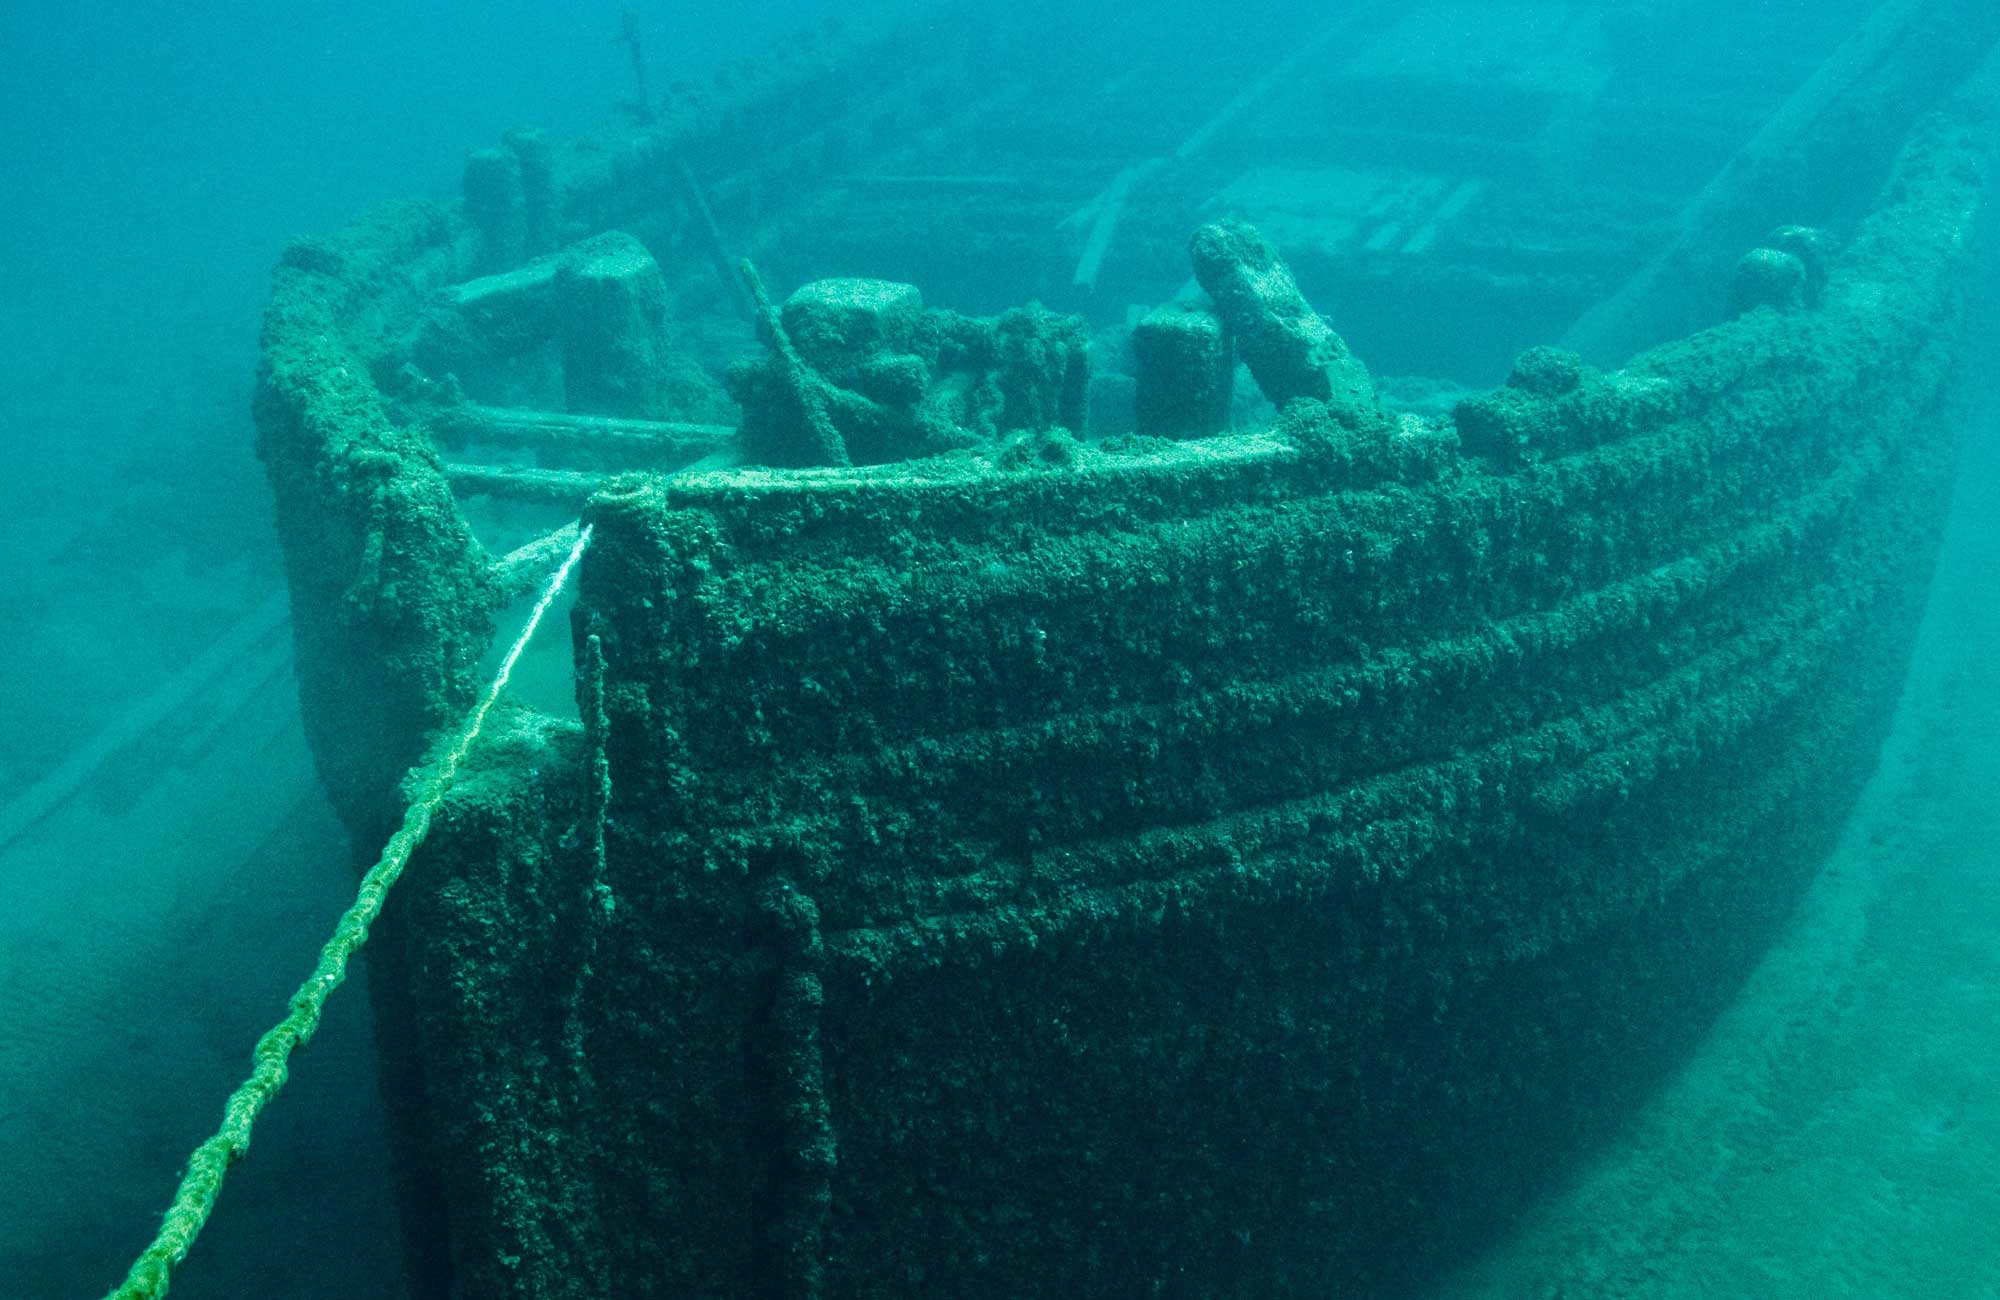 Underwater Shipwreck in Thunder Bay